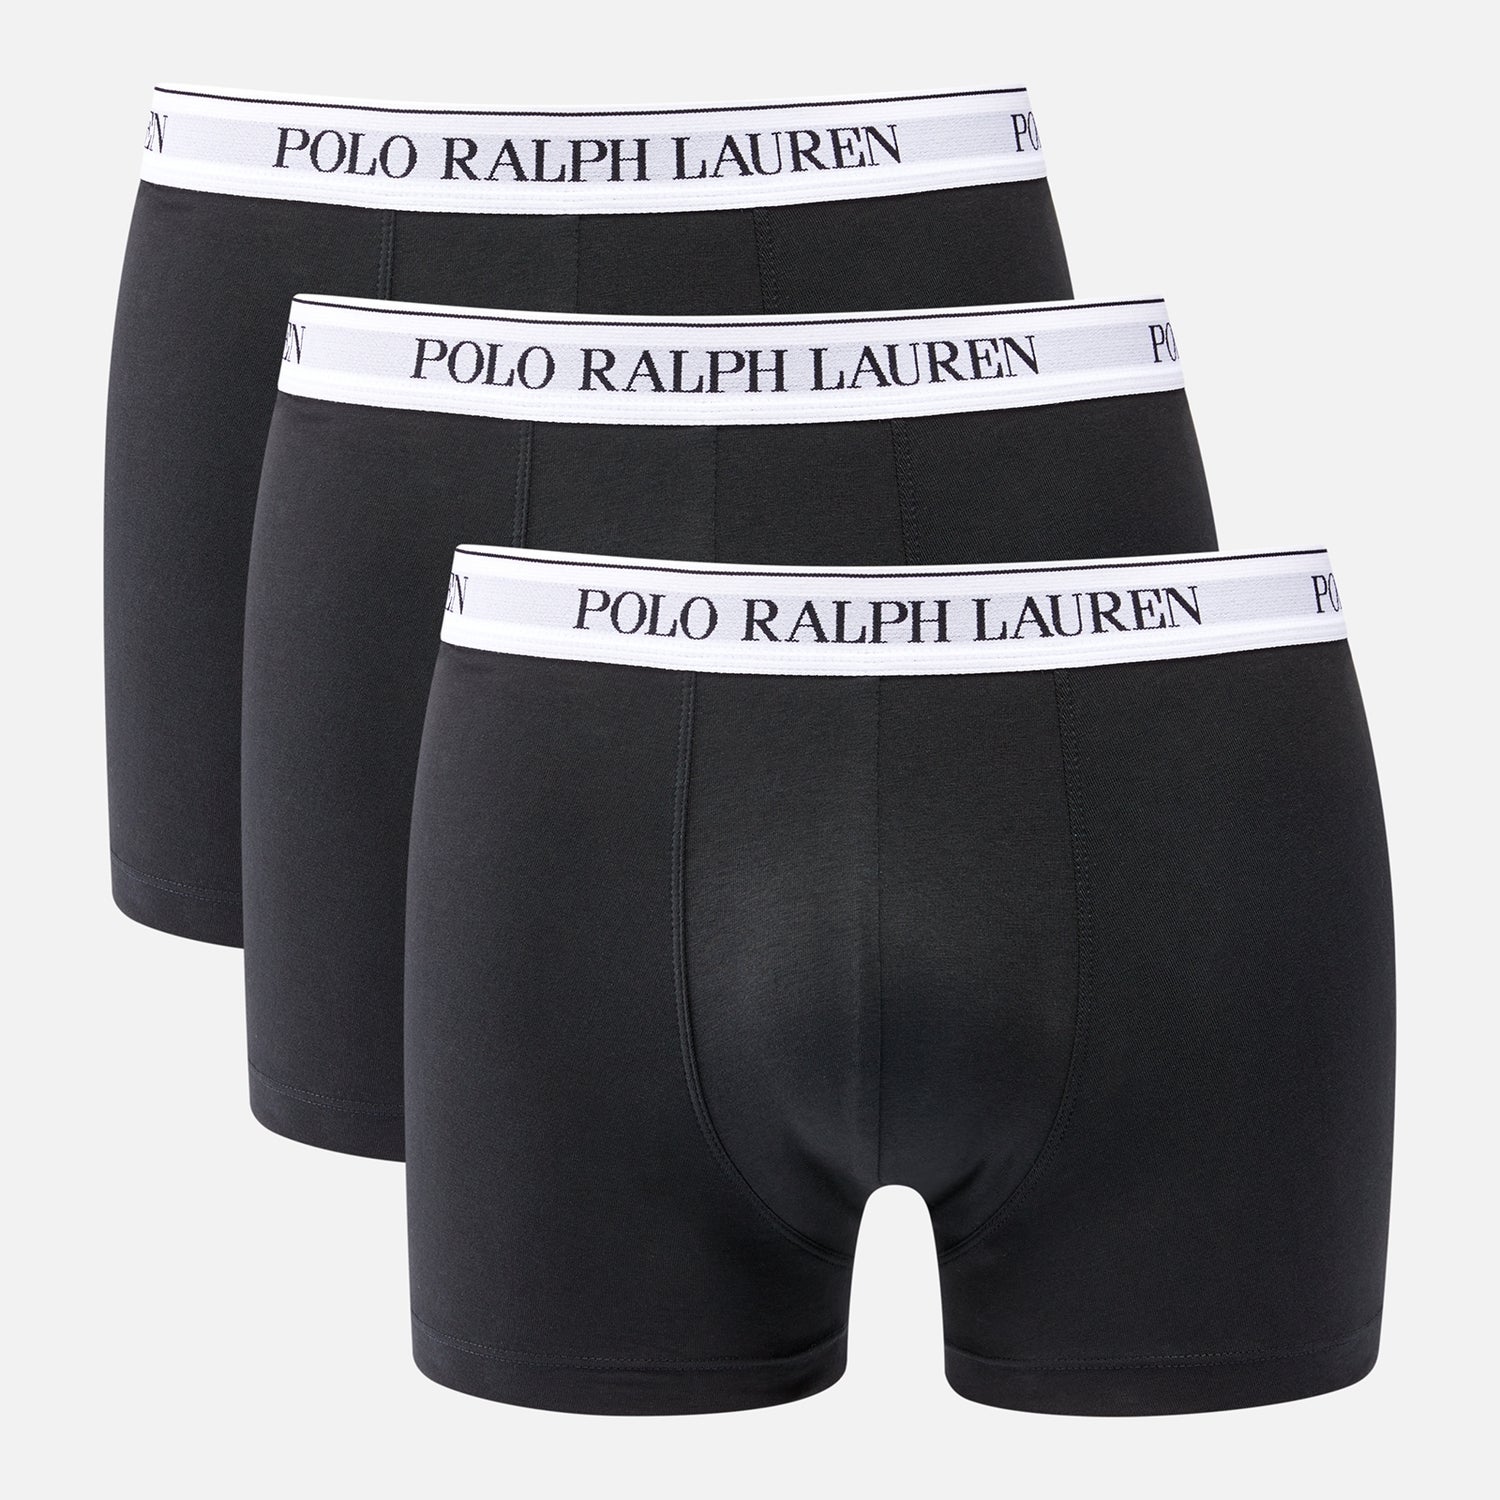 Polo Ralph Lauren Men's Classic 3 Pack Trunks - Black/White | TheHut.com